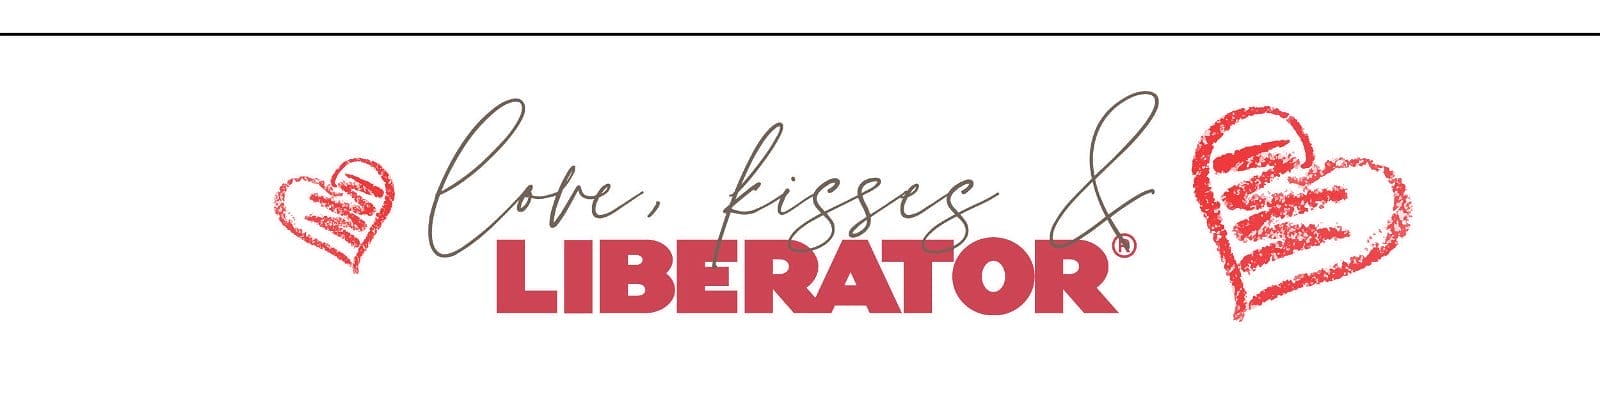 Love, kisses, Liberator